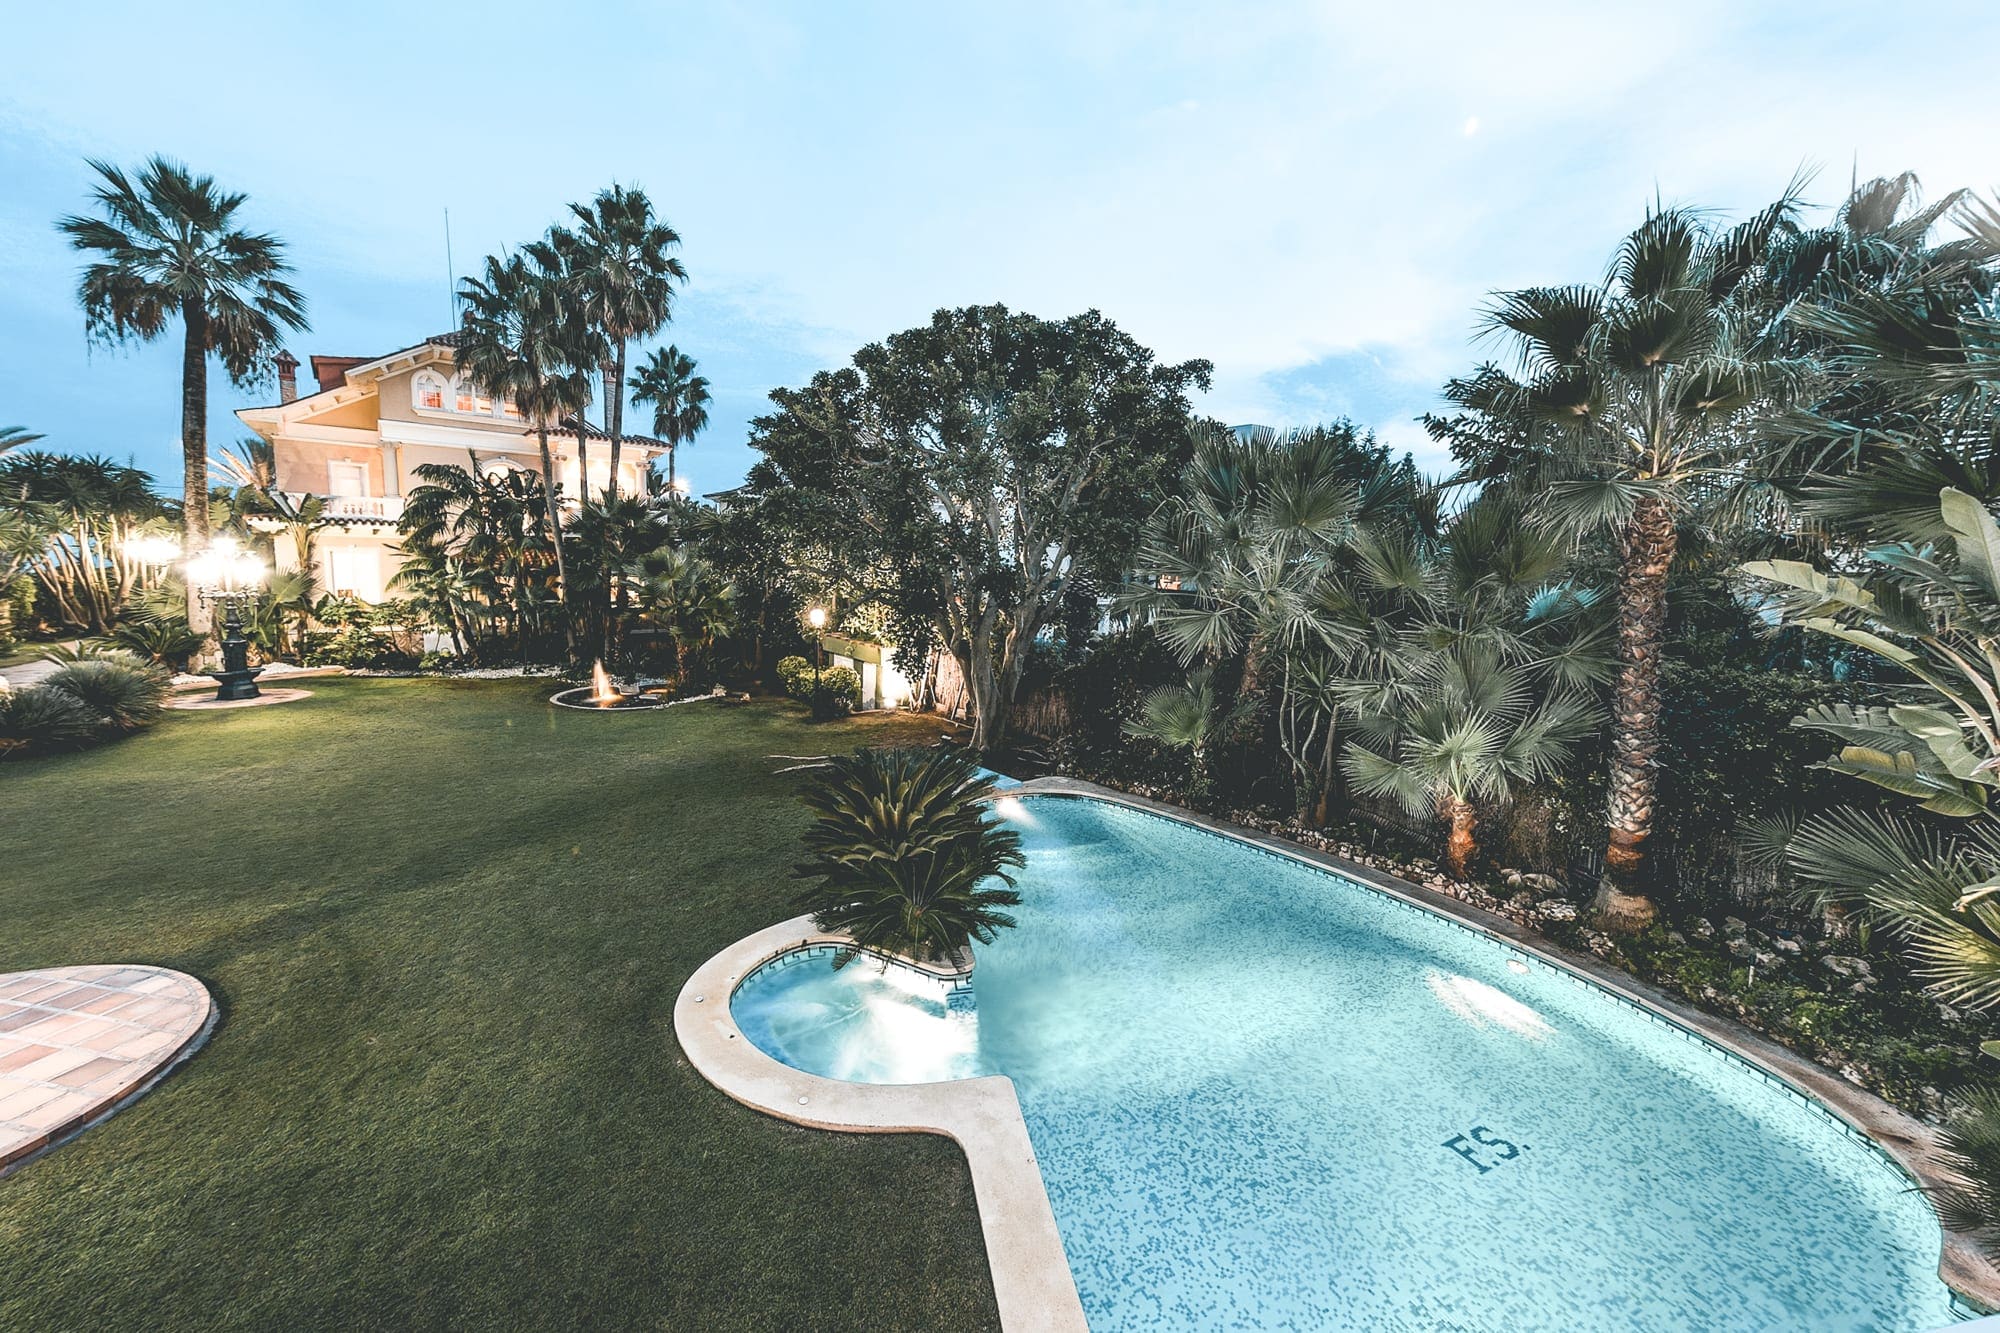 Tropisch paradijsje, Airbnb Finds: een tropisch paradijsje in Catalonie